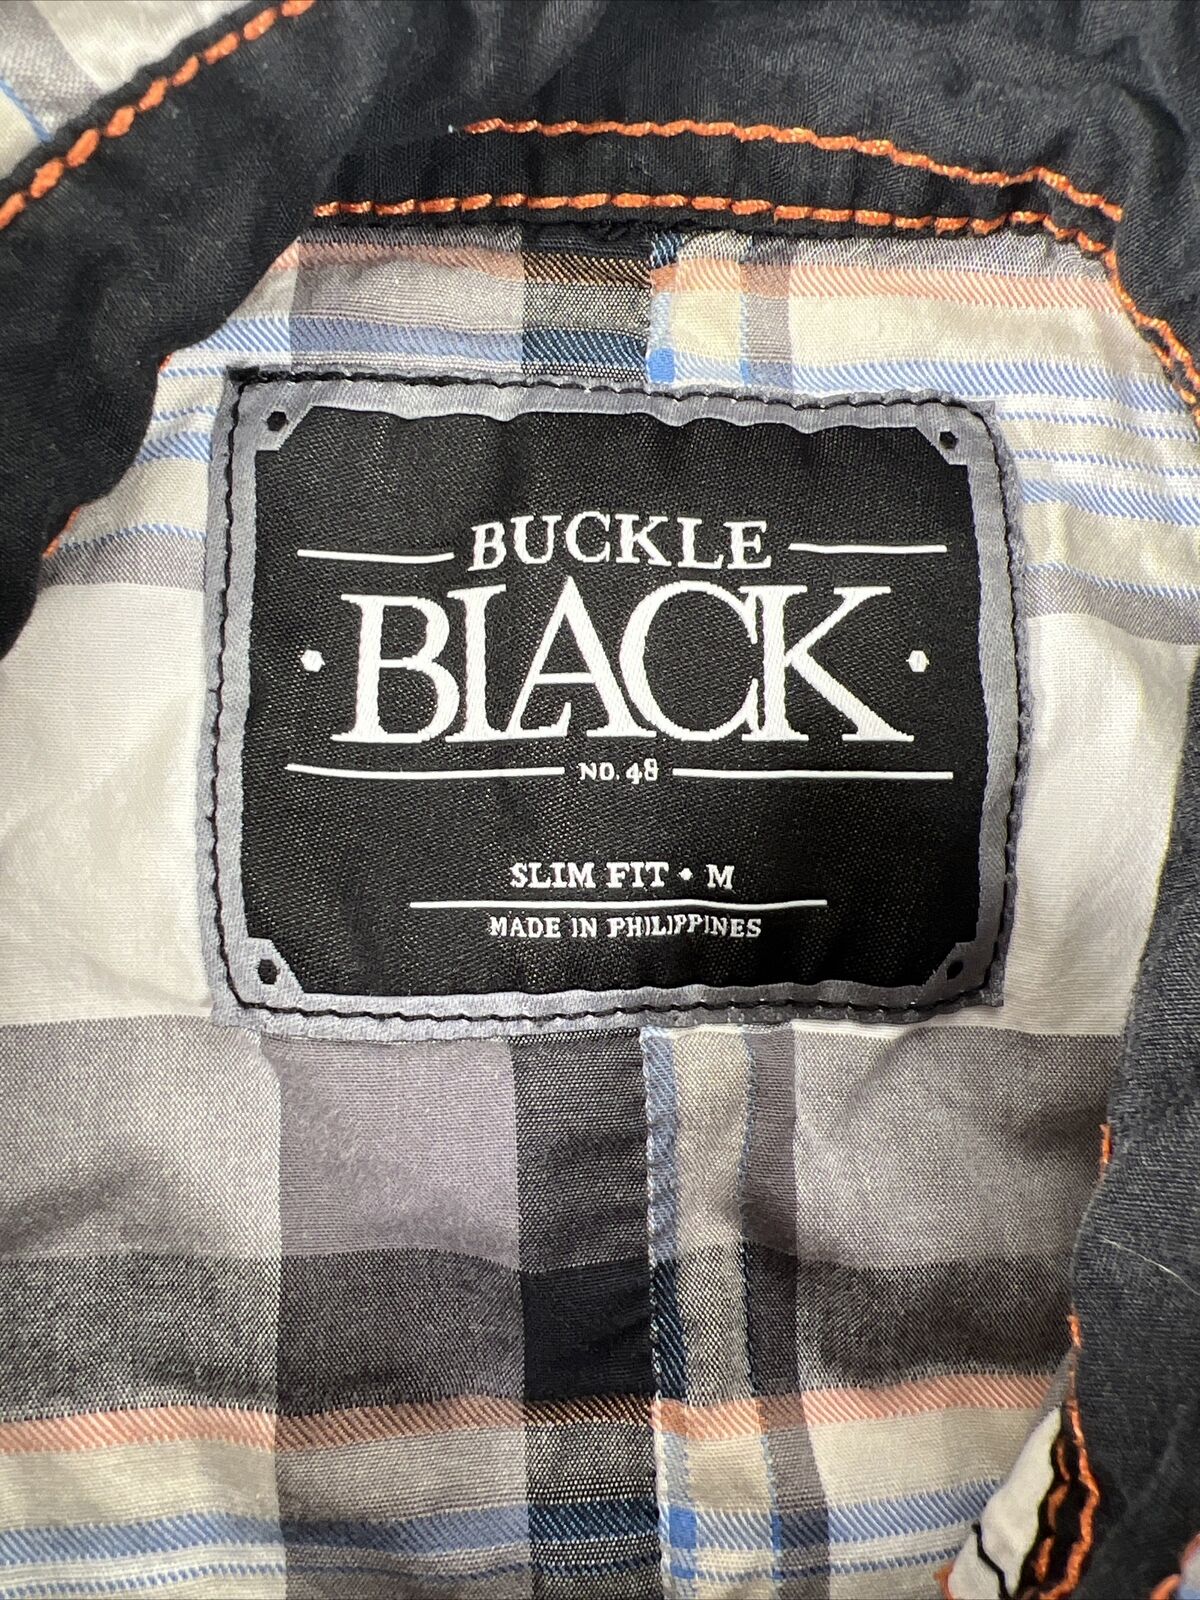 Buckle Black Men's Gray Plaid Long Sleeve Slim Fit Casual Shirt - M